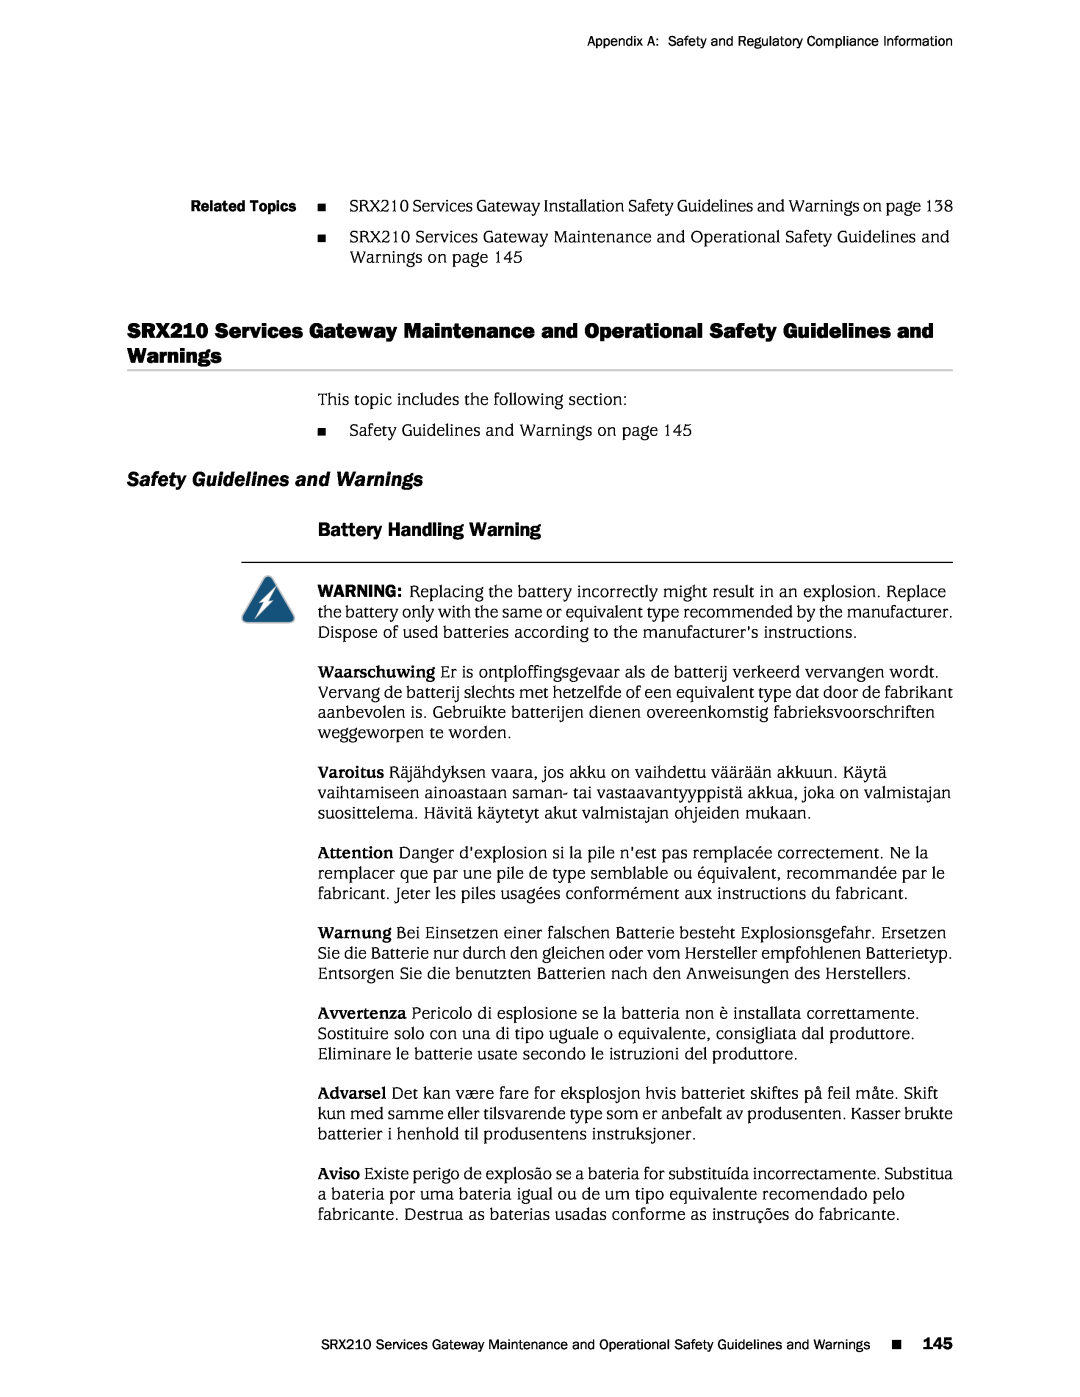 Juniper Networks SRX 210 manual Safety Guidelines and Warnings, Battery Handling Warning 